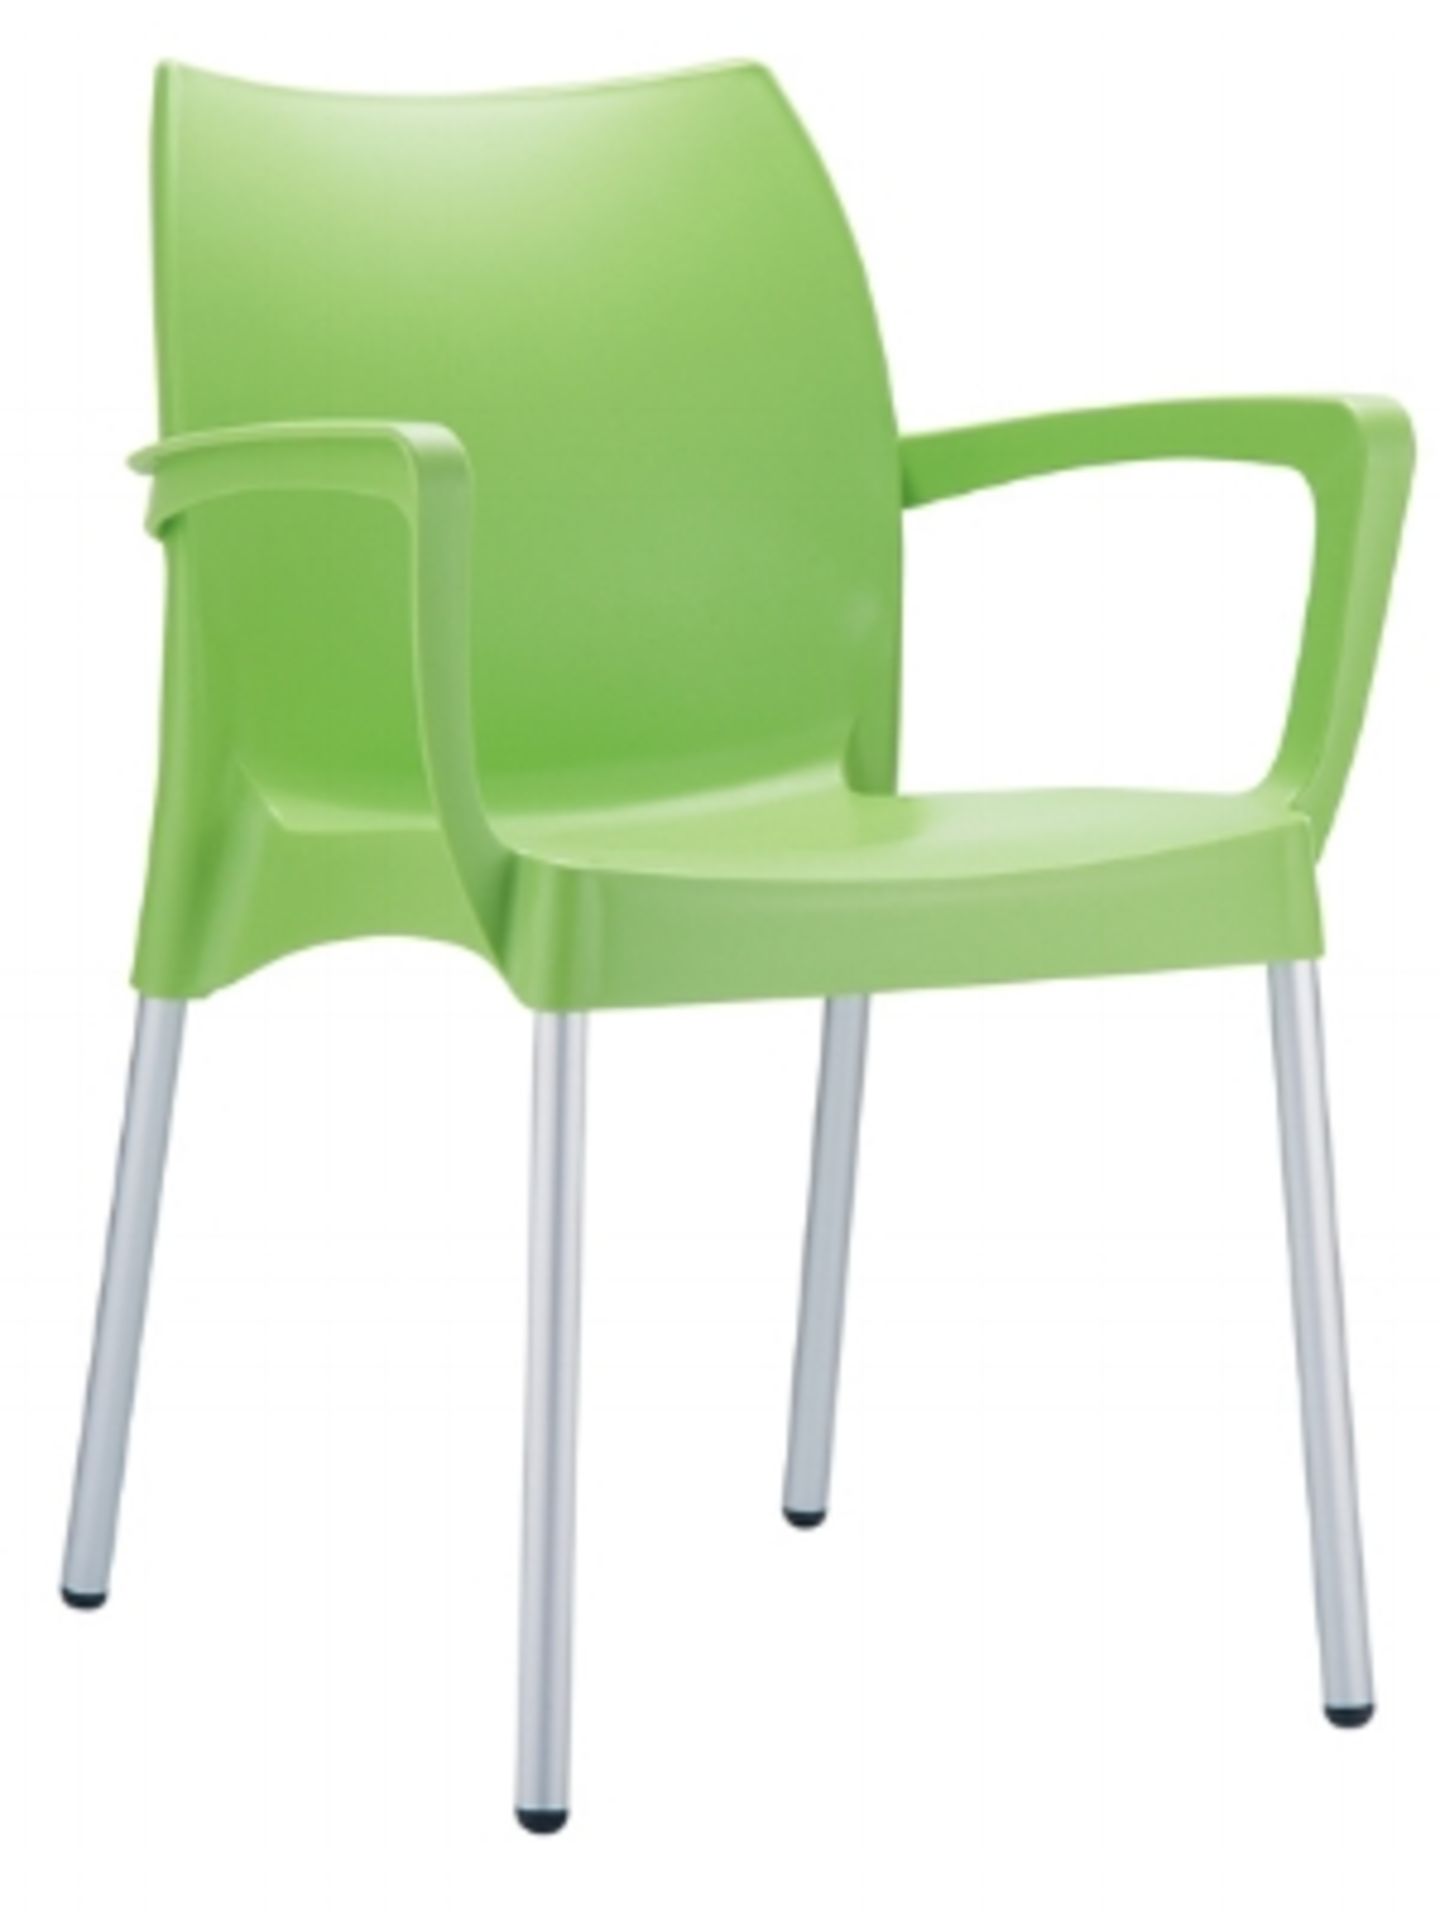 Domenica Arm Chair, light green w/ aluminum legs, 21 boxes w/ 4 each, 84 total